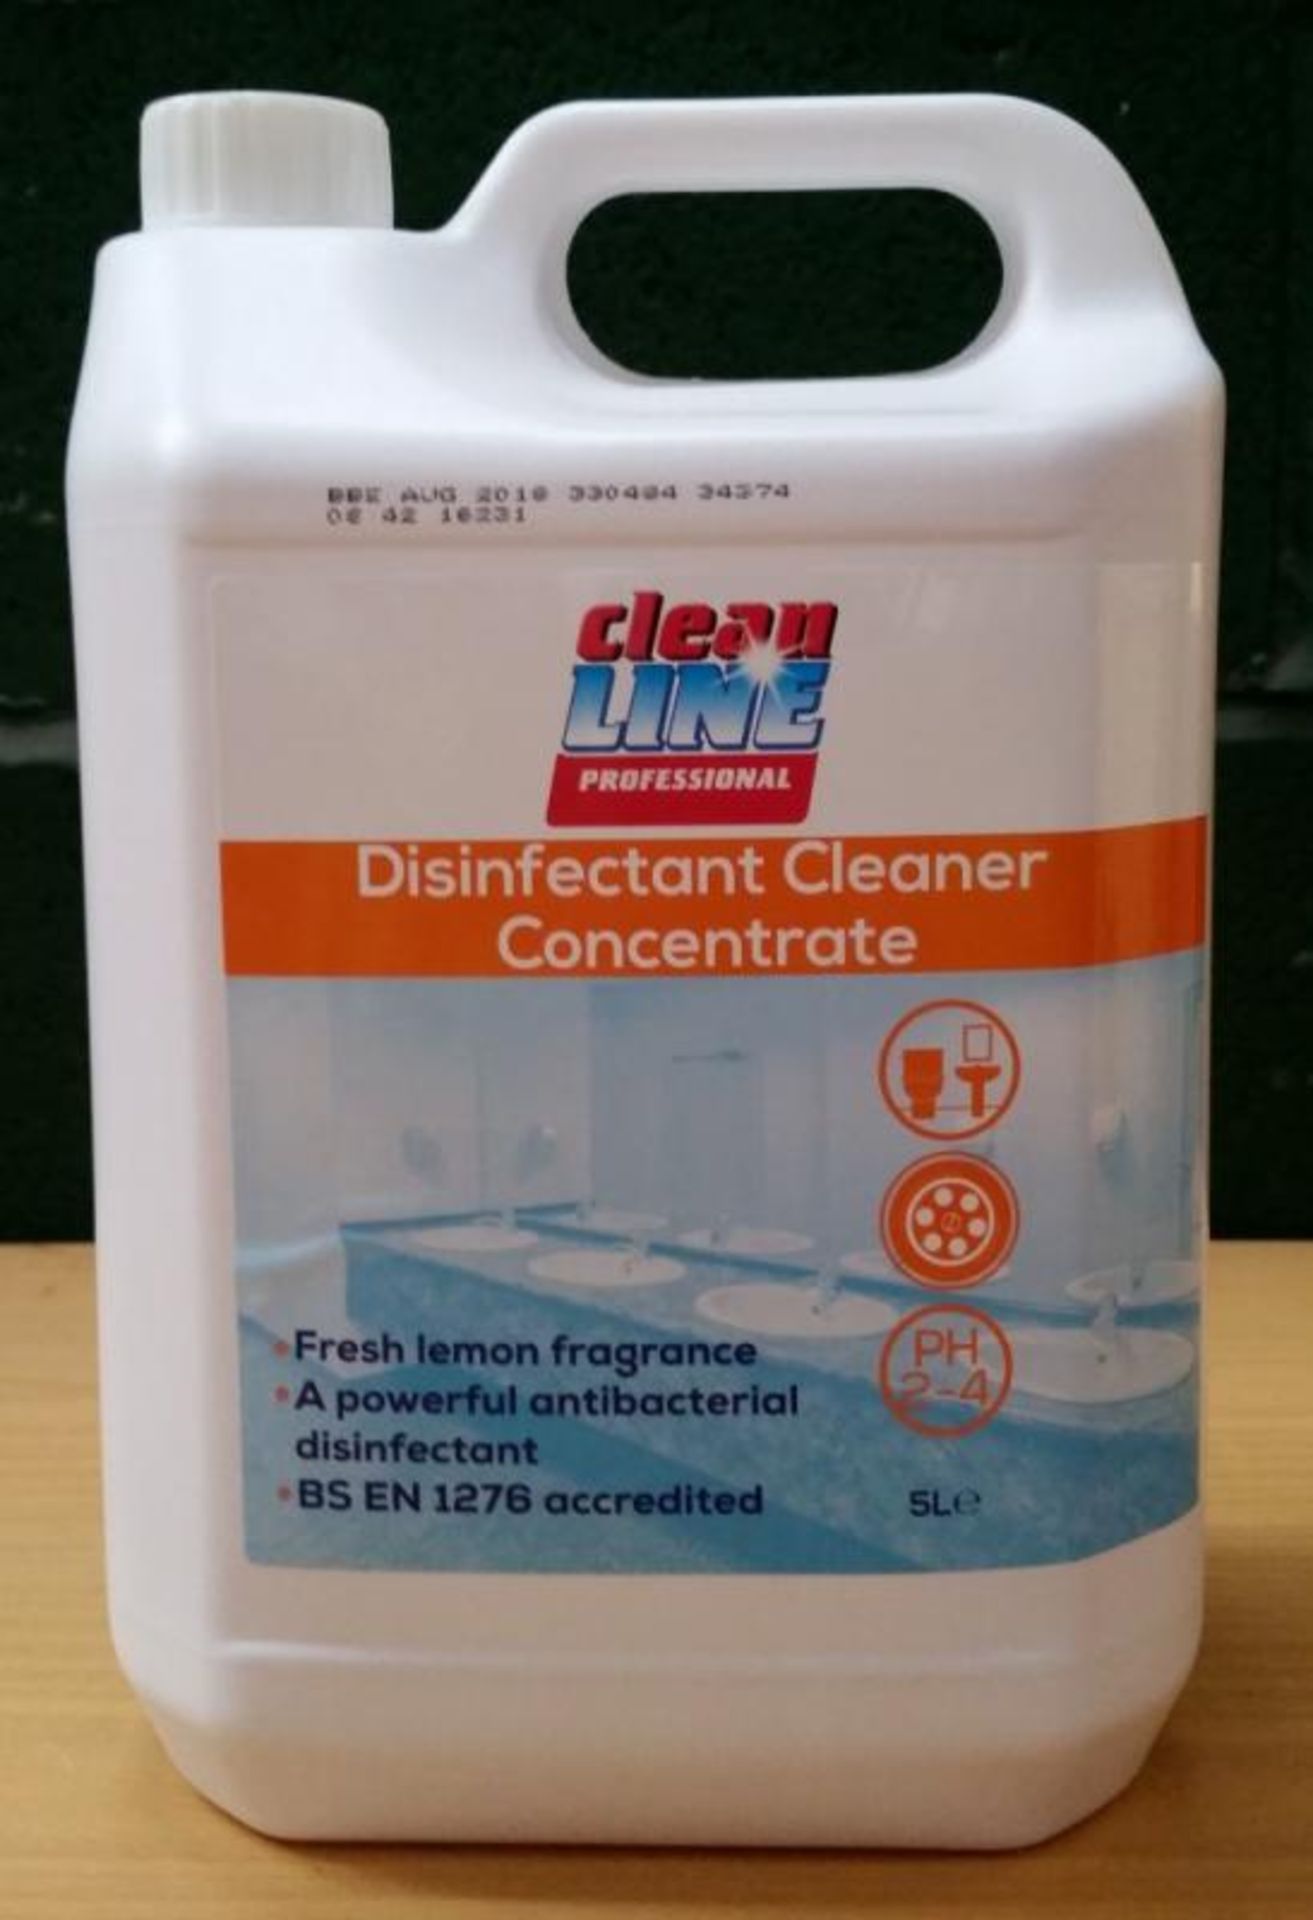 10 x Clean Line Professional 5 Litre Disinfectant Cleaner Concentrate - Fresh Lemon Fragrance - Best